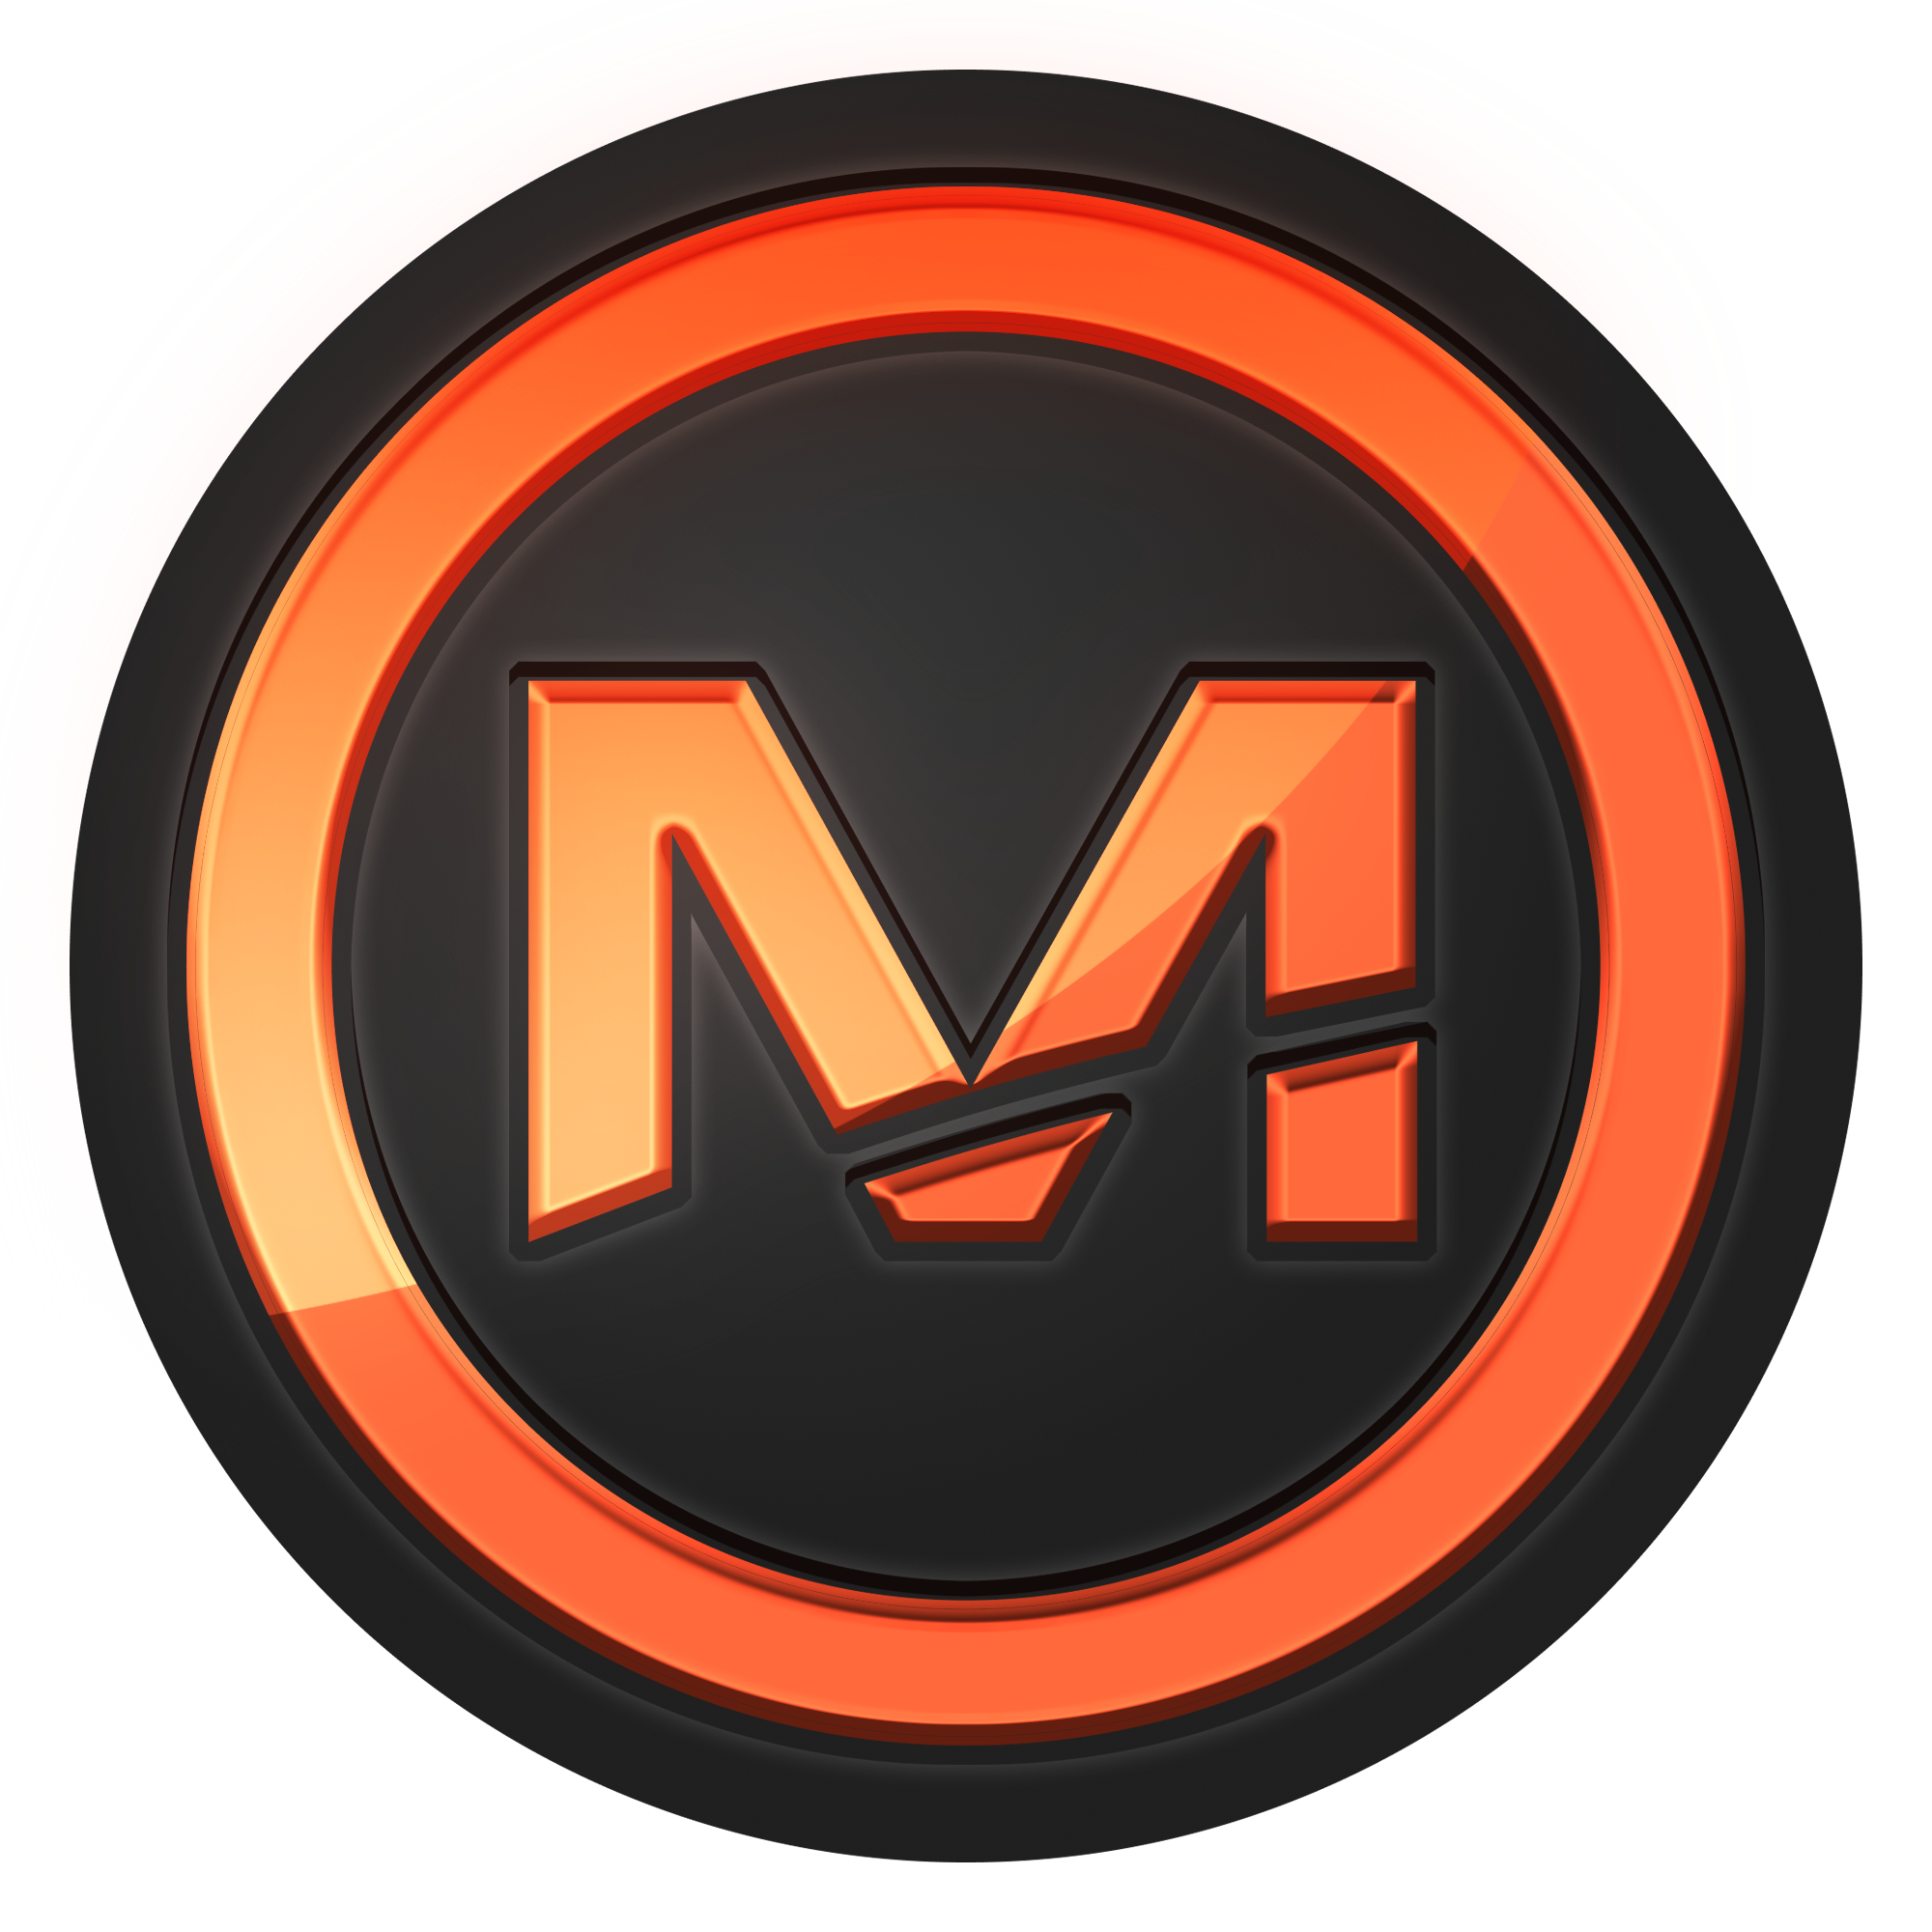 MARSBASE logo